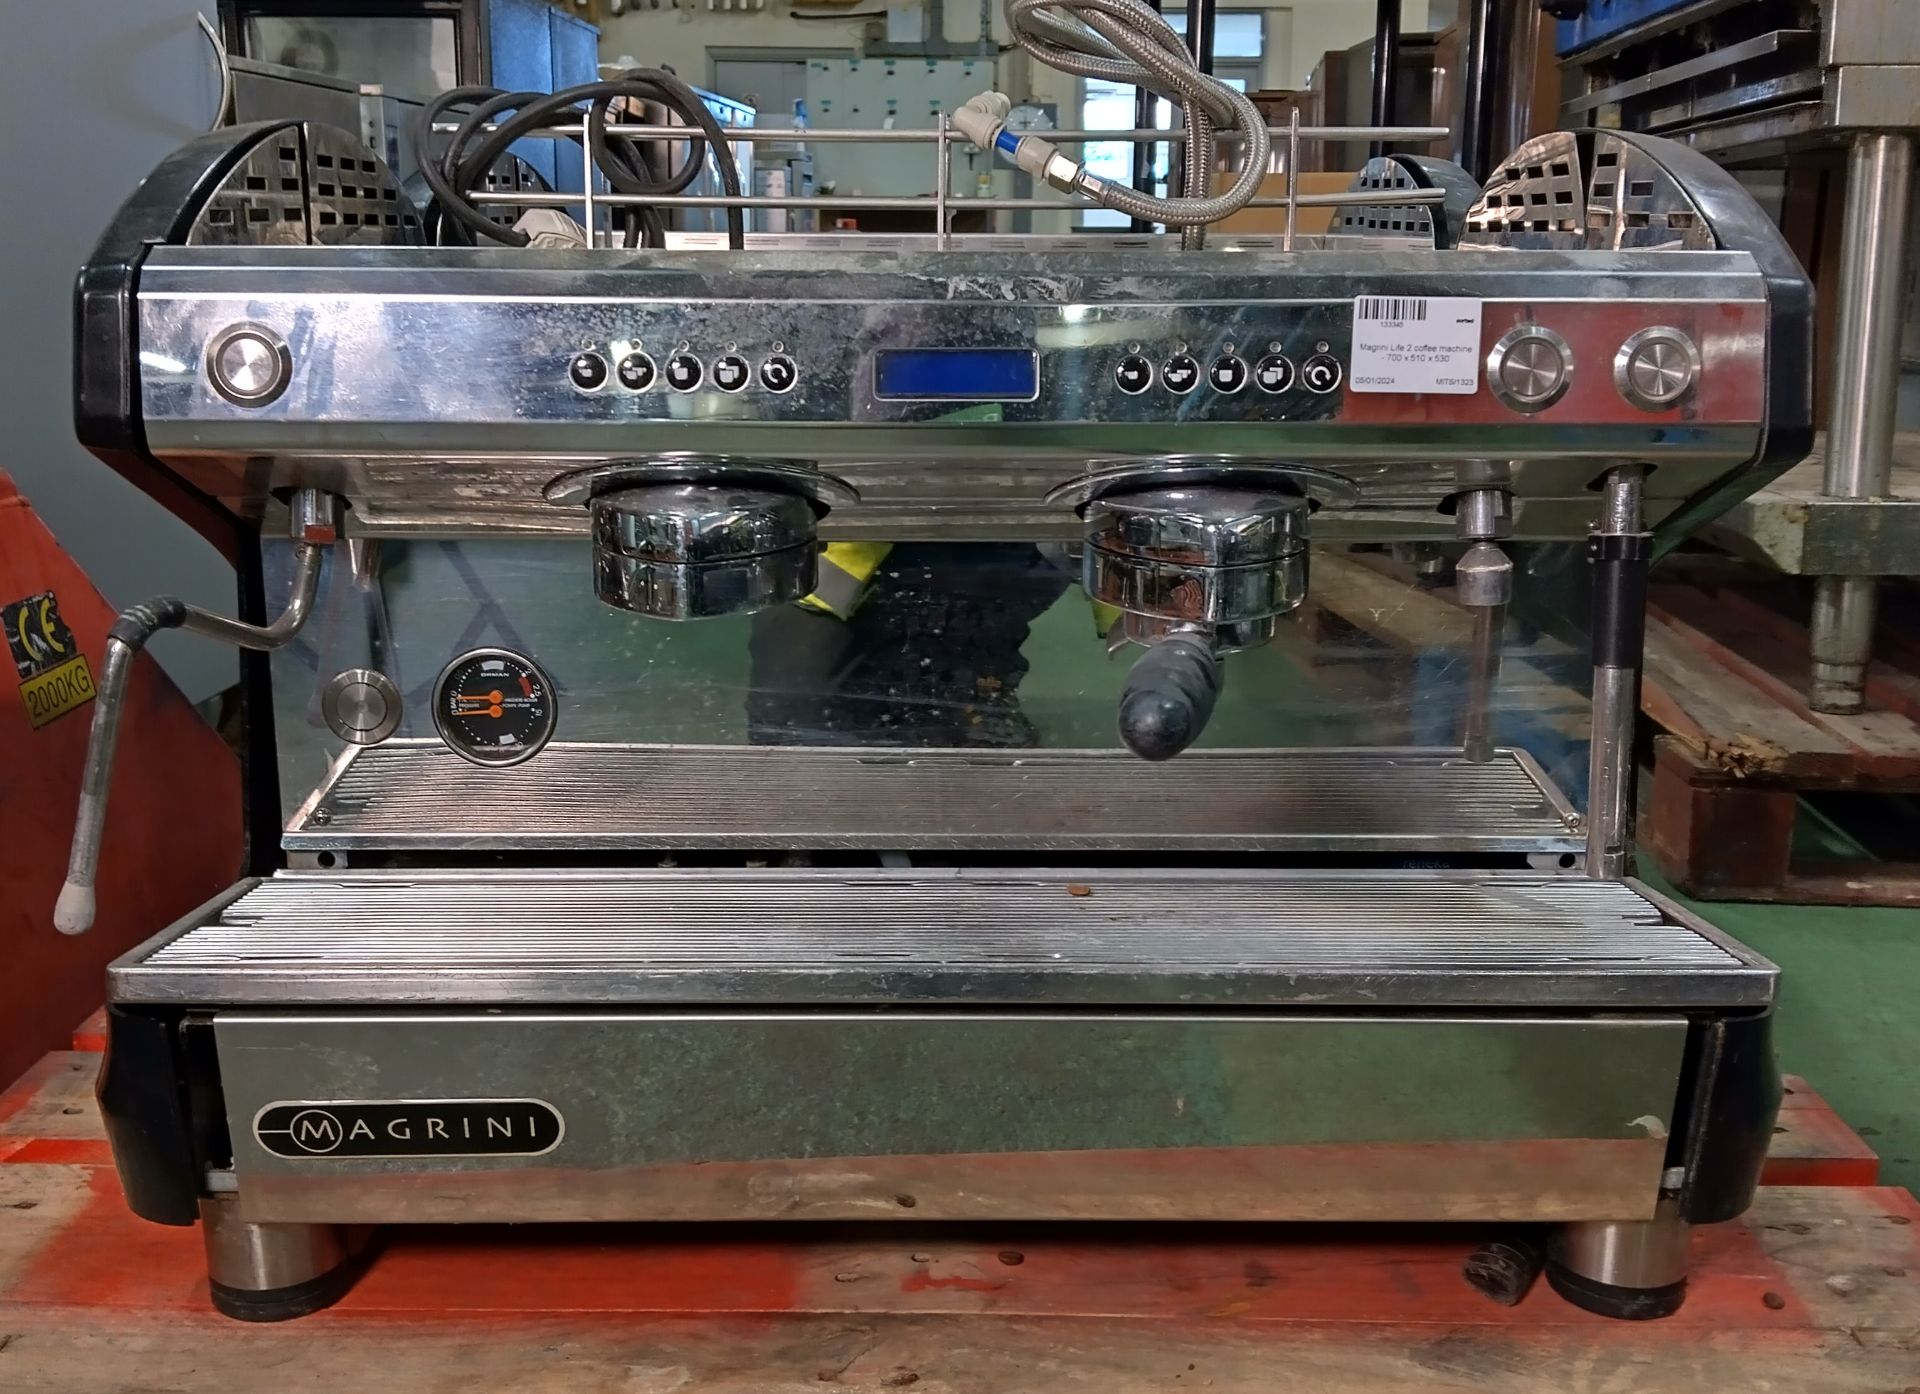 Magrini Life 2 coffee machine (missing drip tray) - 700 x 510 x 530mm - Image 4 of 4